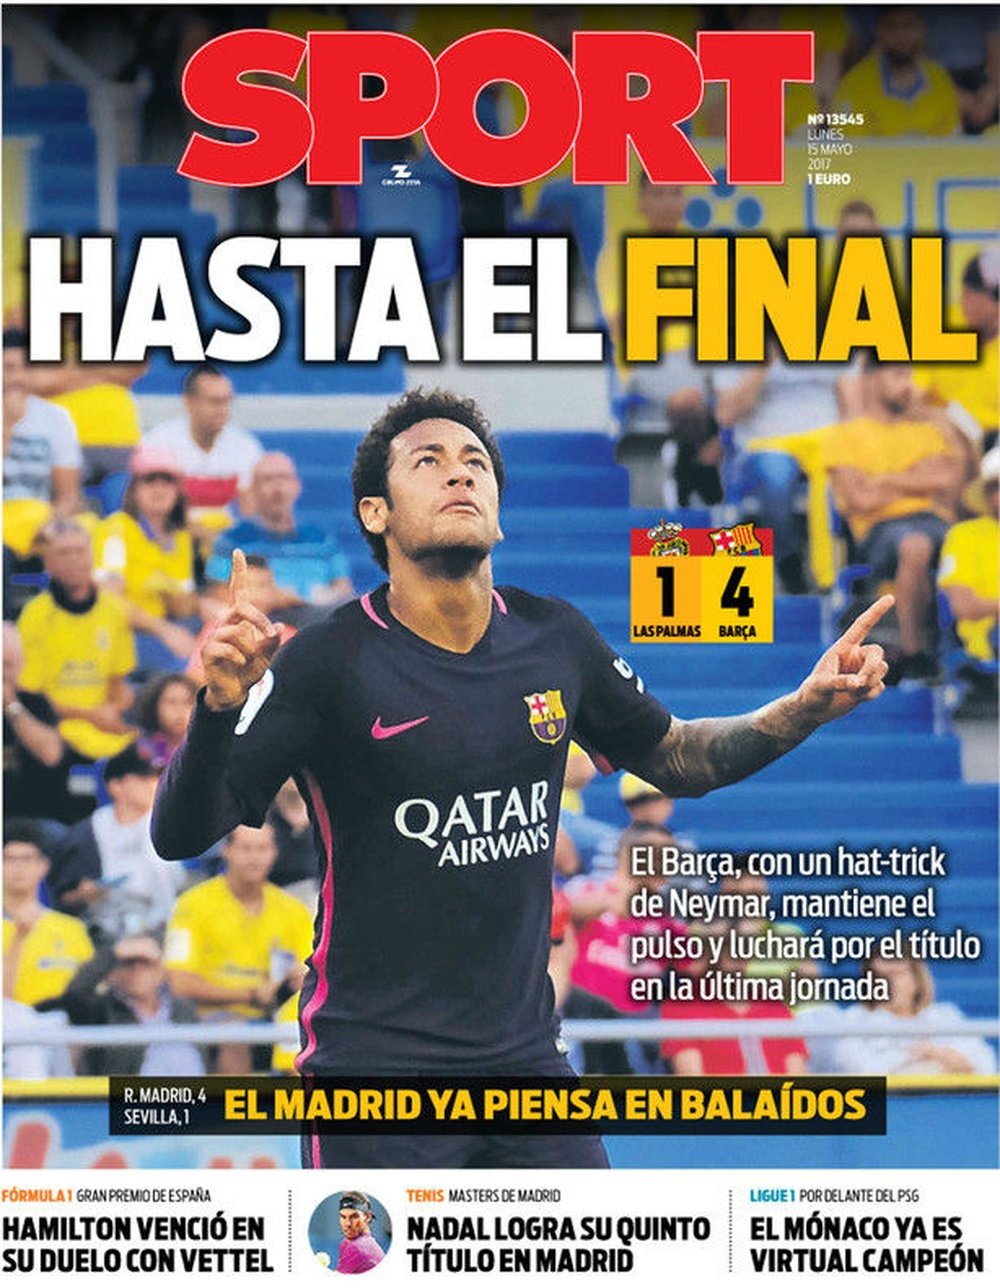 Capa do jornal 'Sport' do 15-05-17. Sport